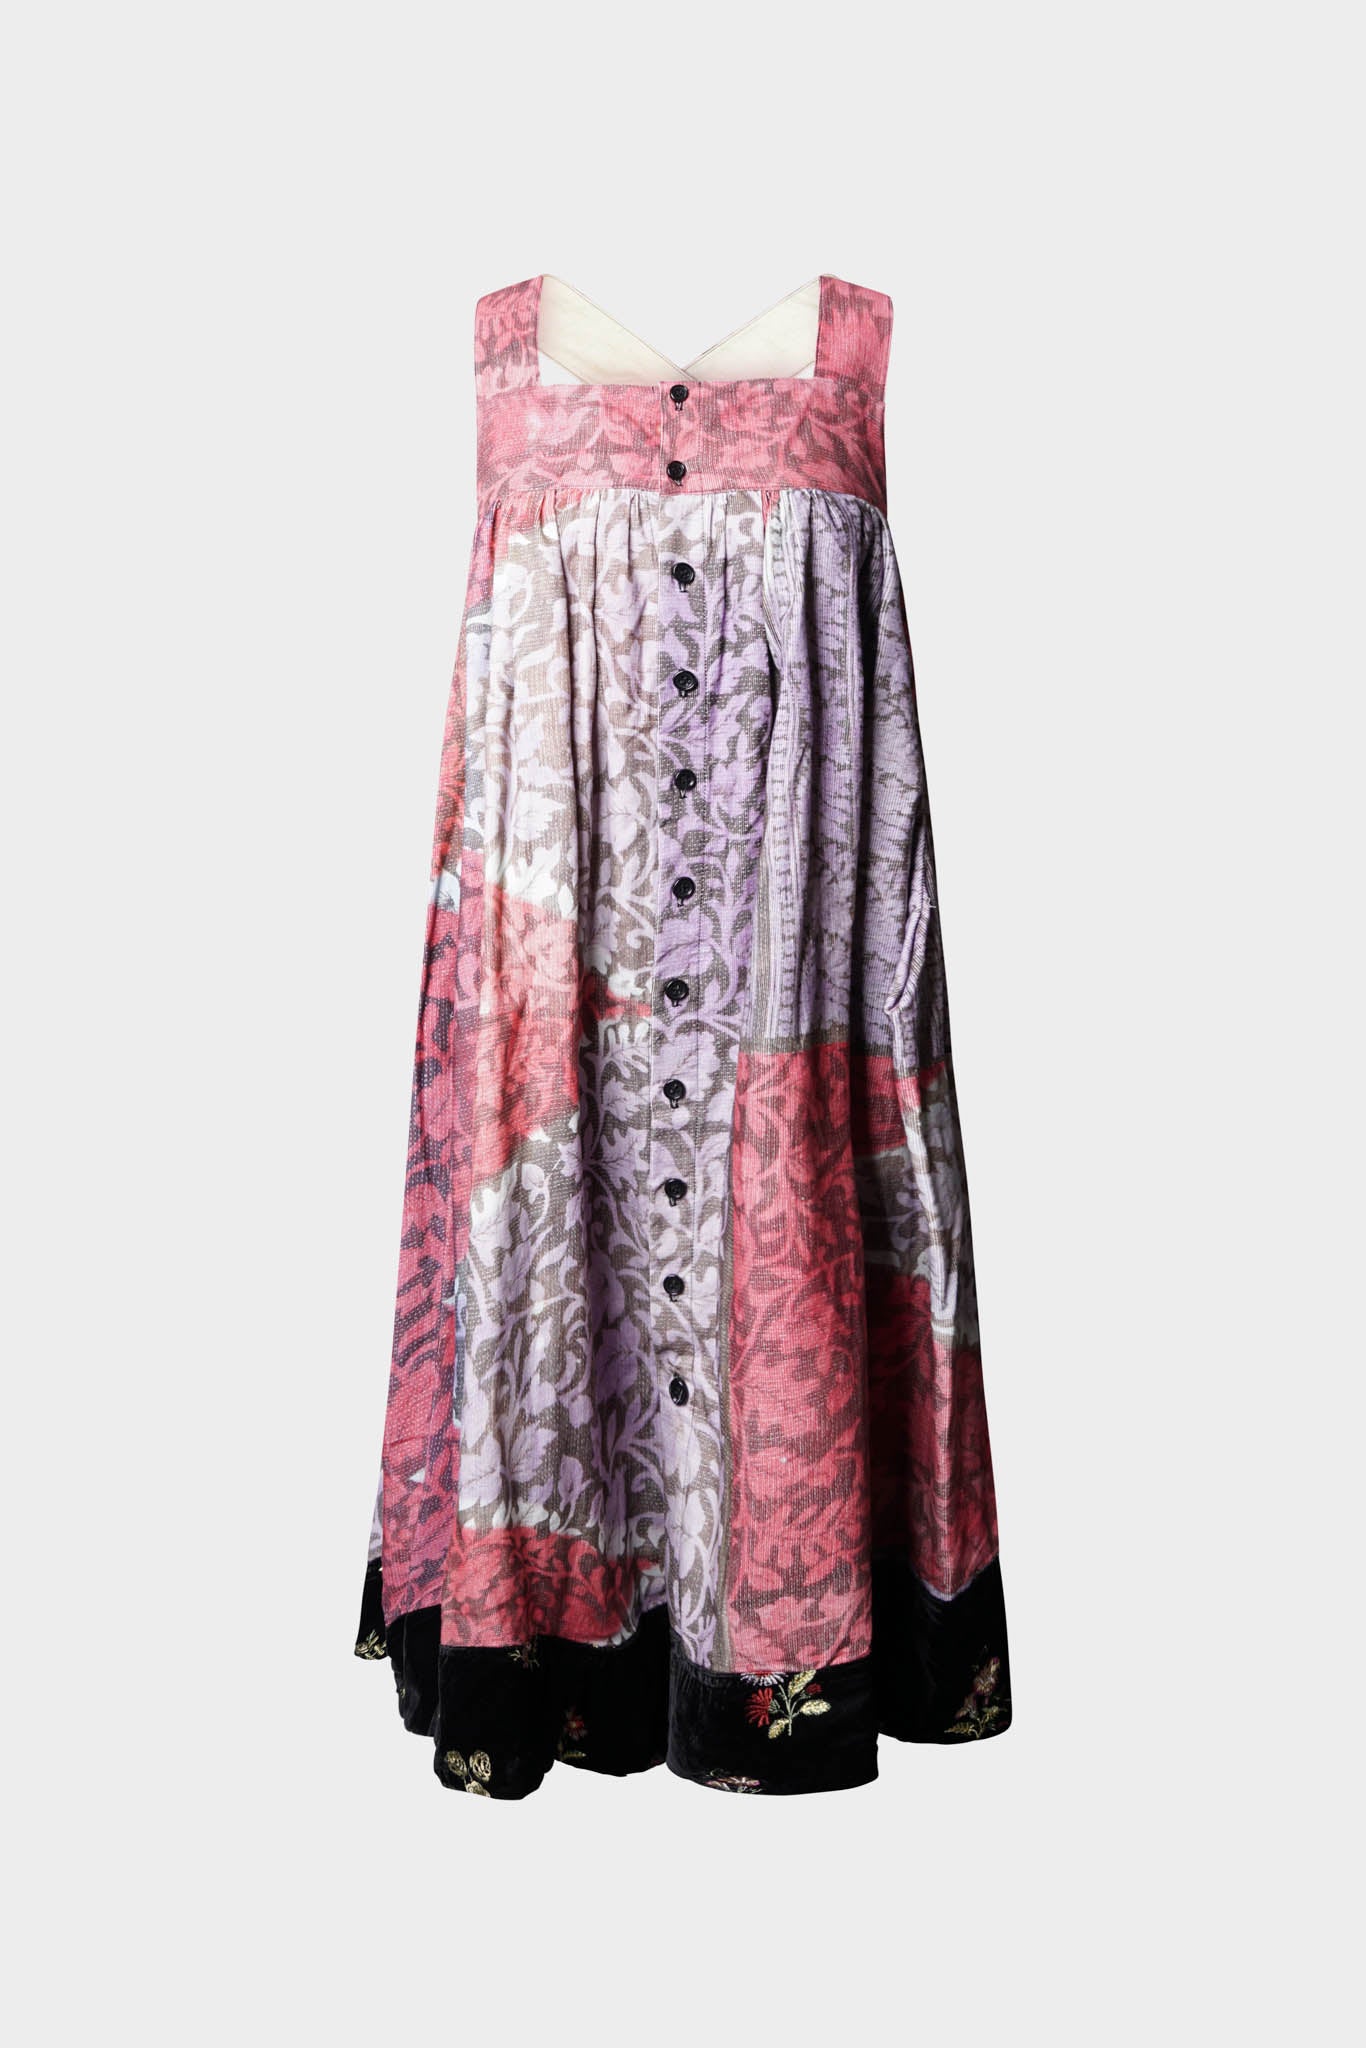 Selectshop FRAME - TAO Jumper Skirt Dresses Dubai